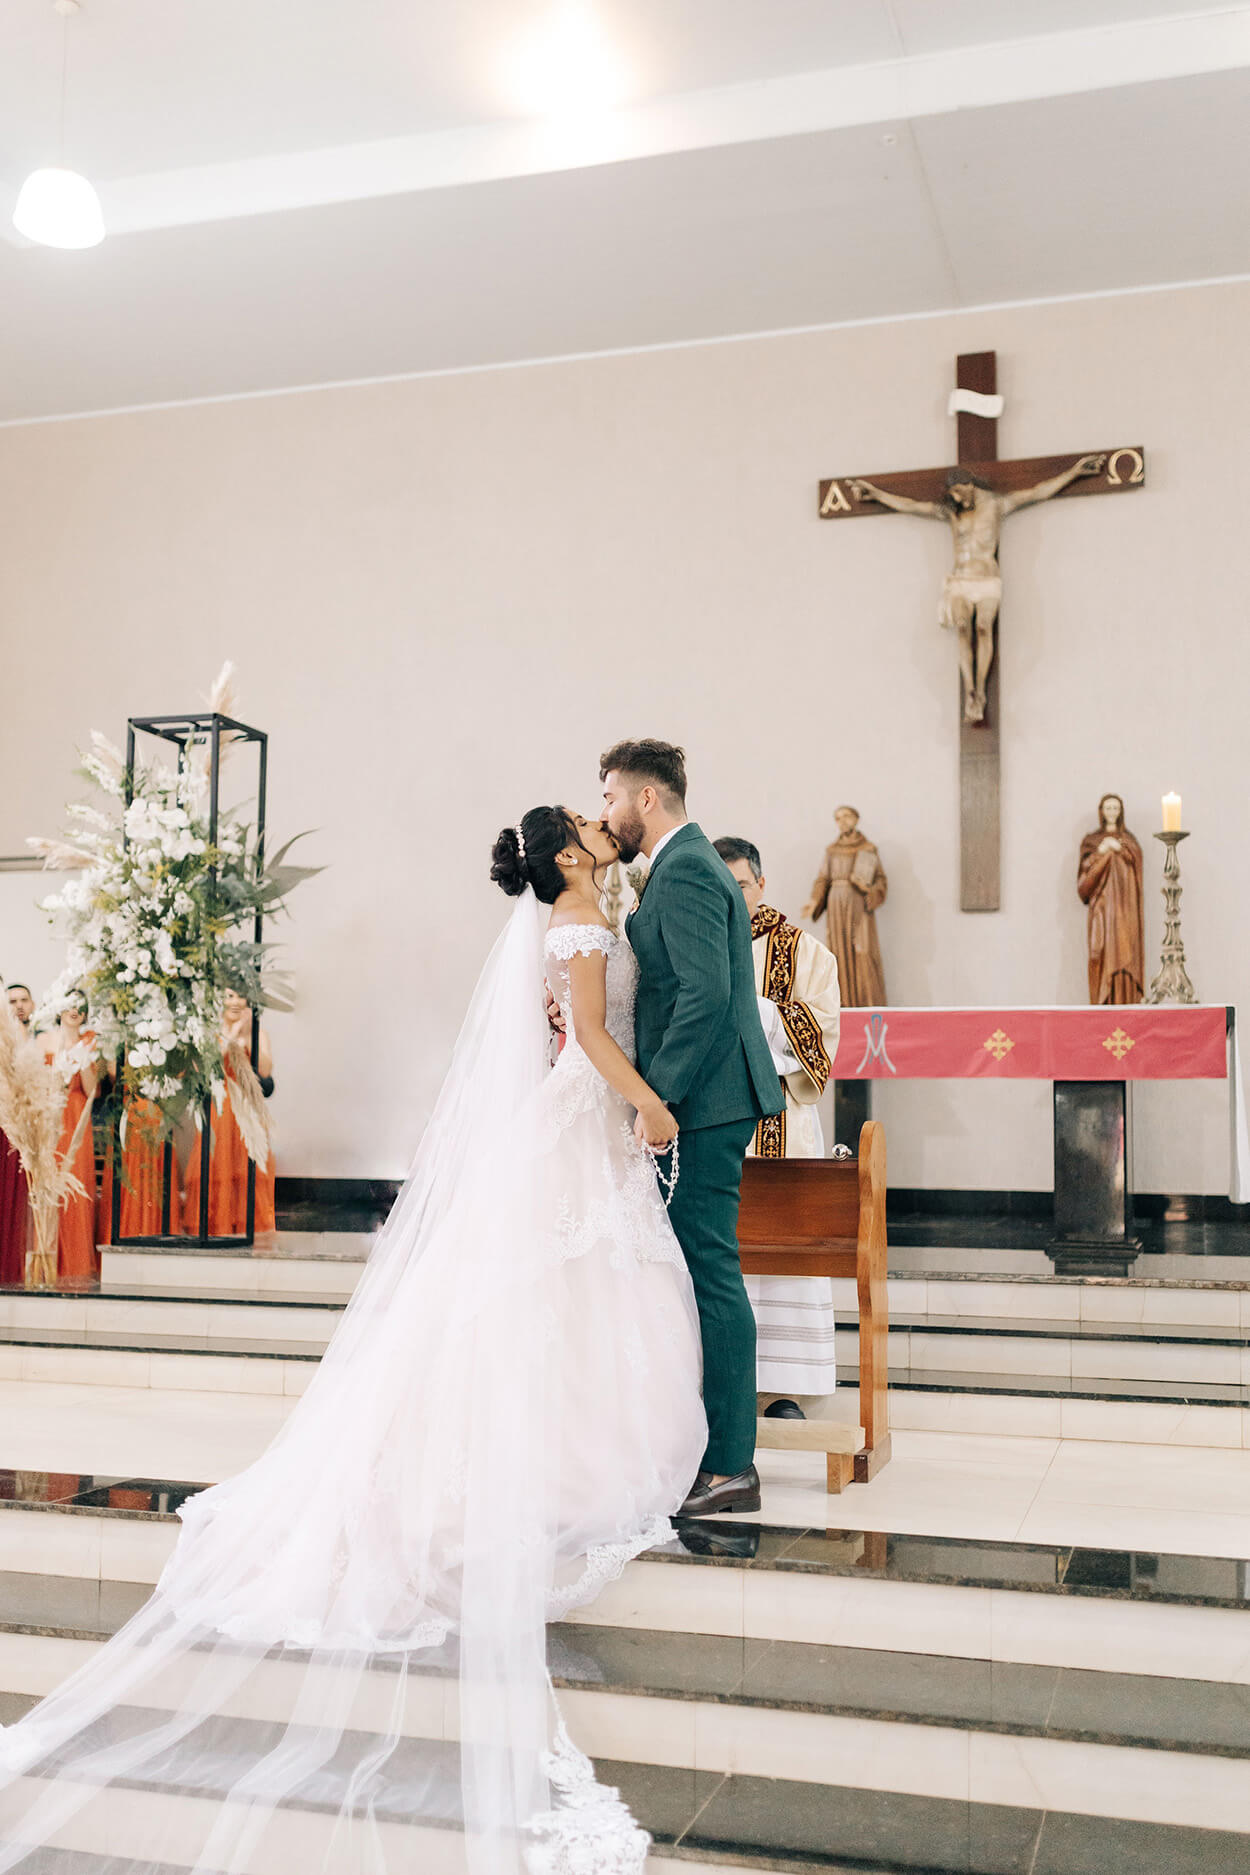 noivos se beijando na igreja